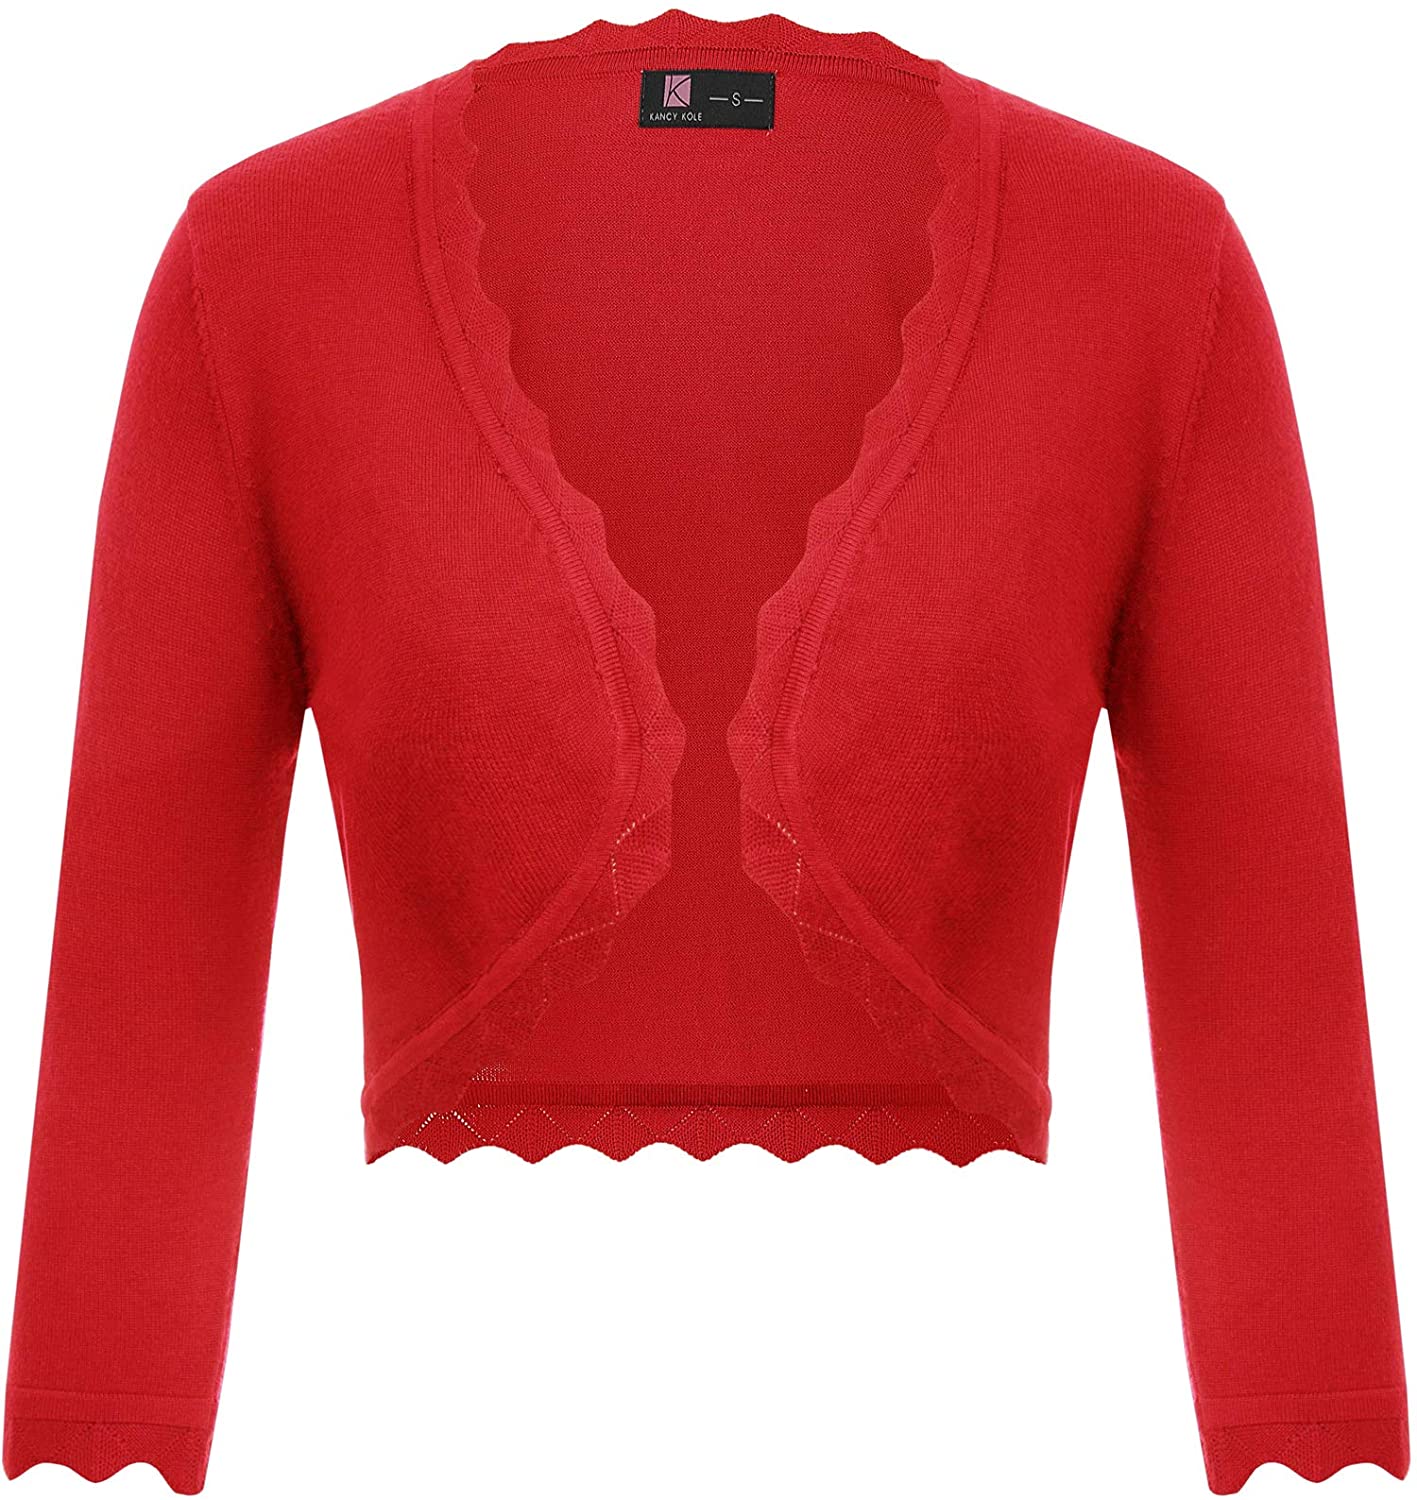 KANCY KOLE Womens Classic Knit Bolero Shrug 3/4 Sleeve Open Front Cropped Cardigan Sweater S-XXL